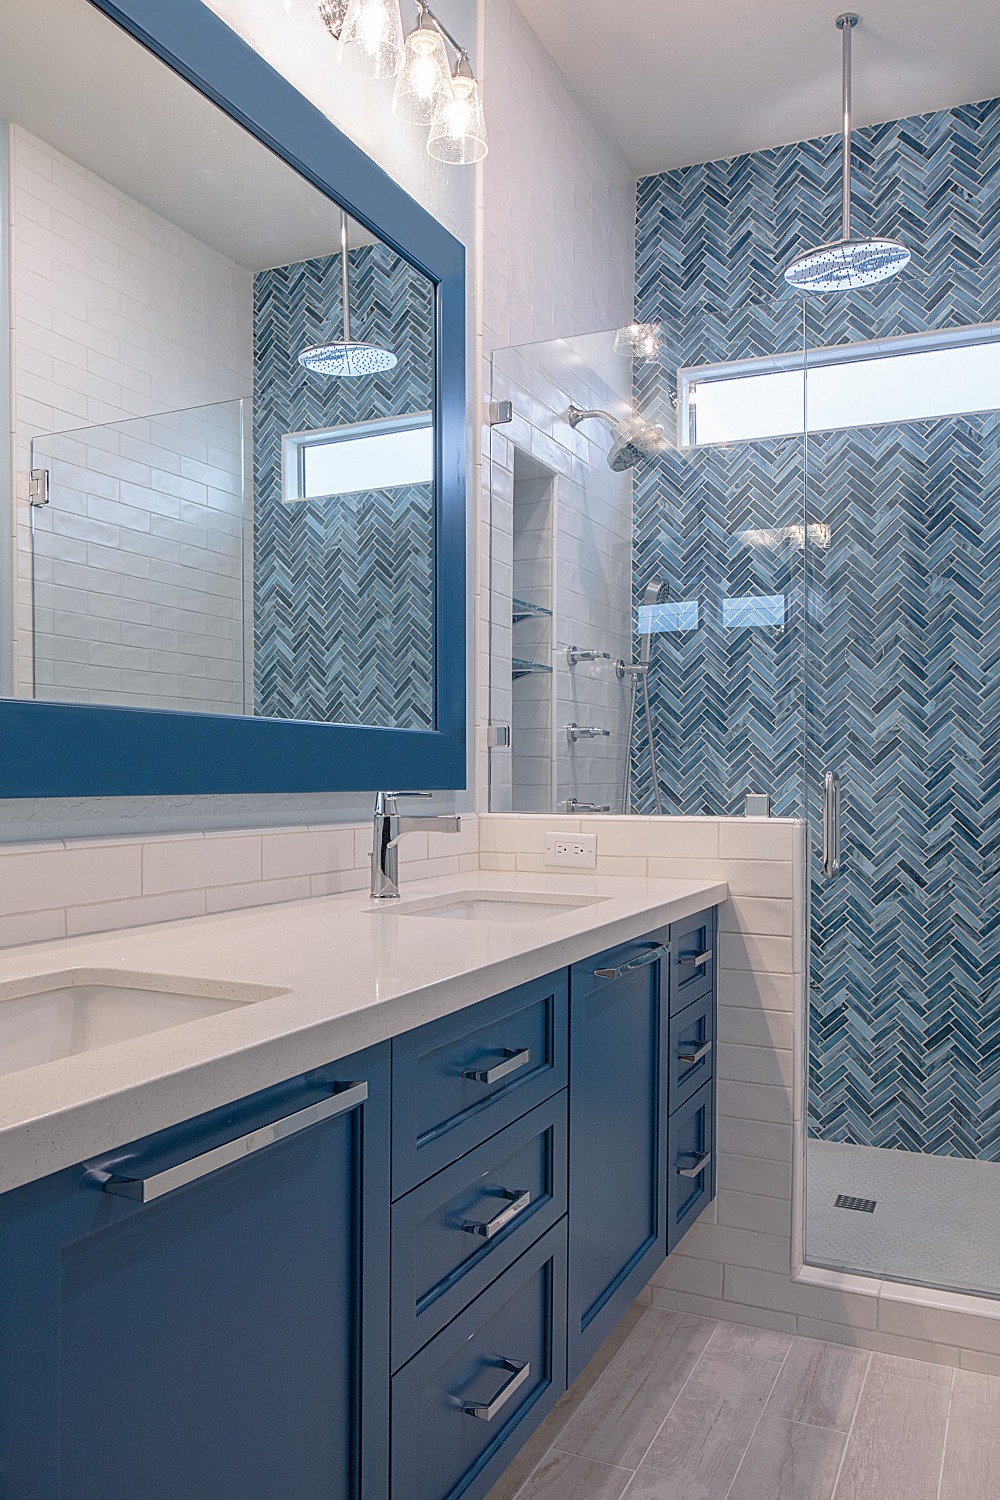 Bathroom Remodel Kitchen Countertops Pre Fit Countertops Building Codes Bathroom's Size Re Bath San Francisco New Tub Wall